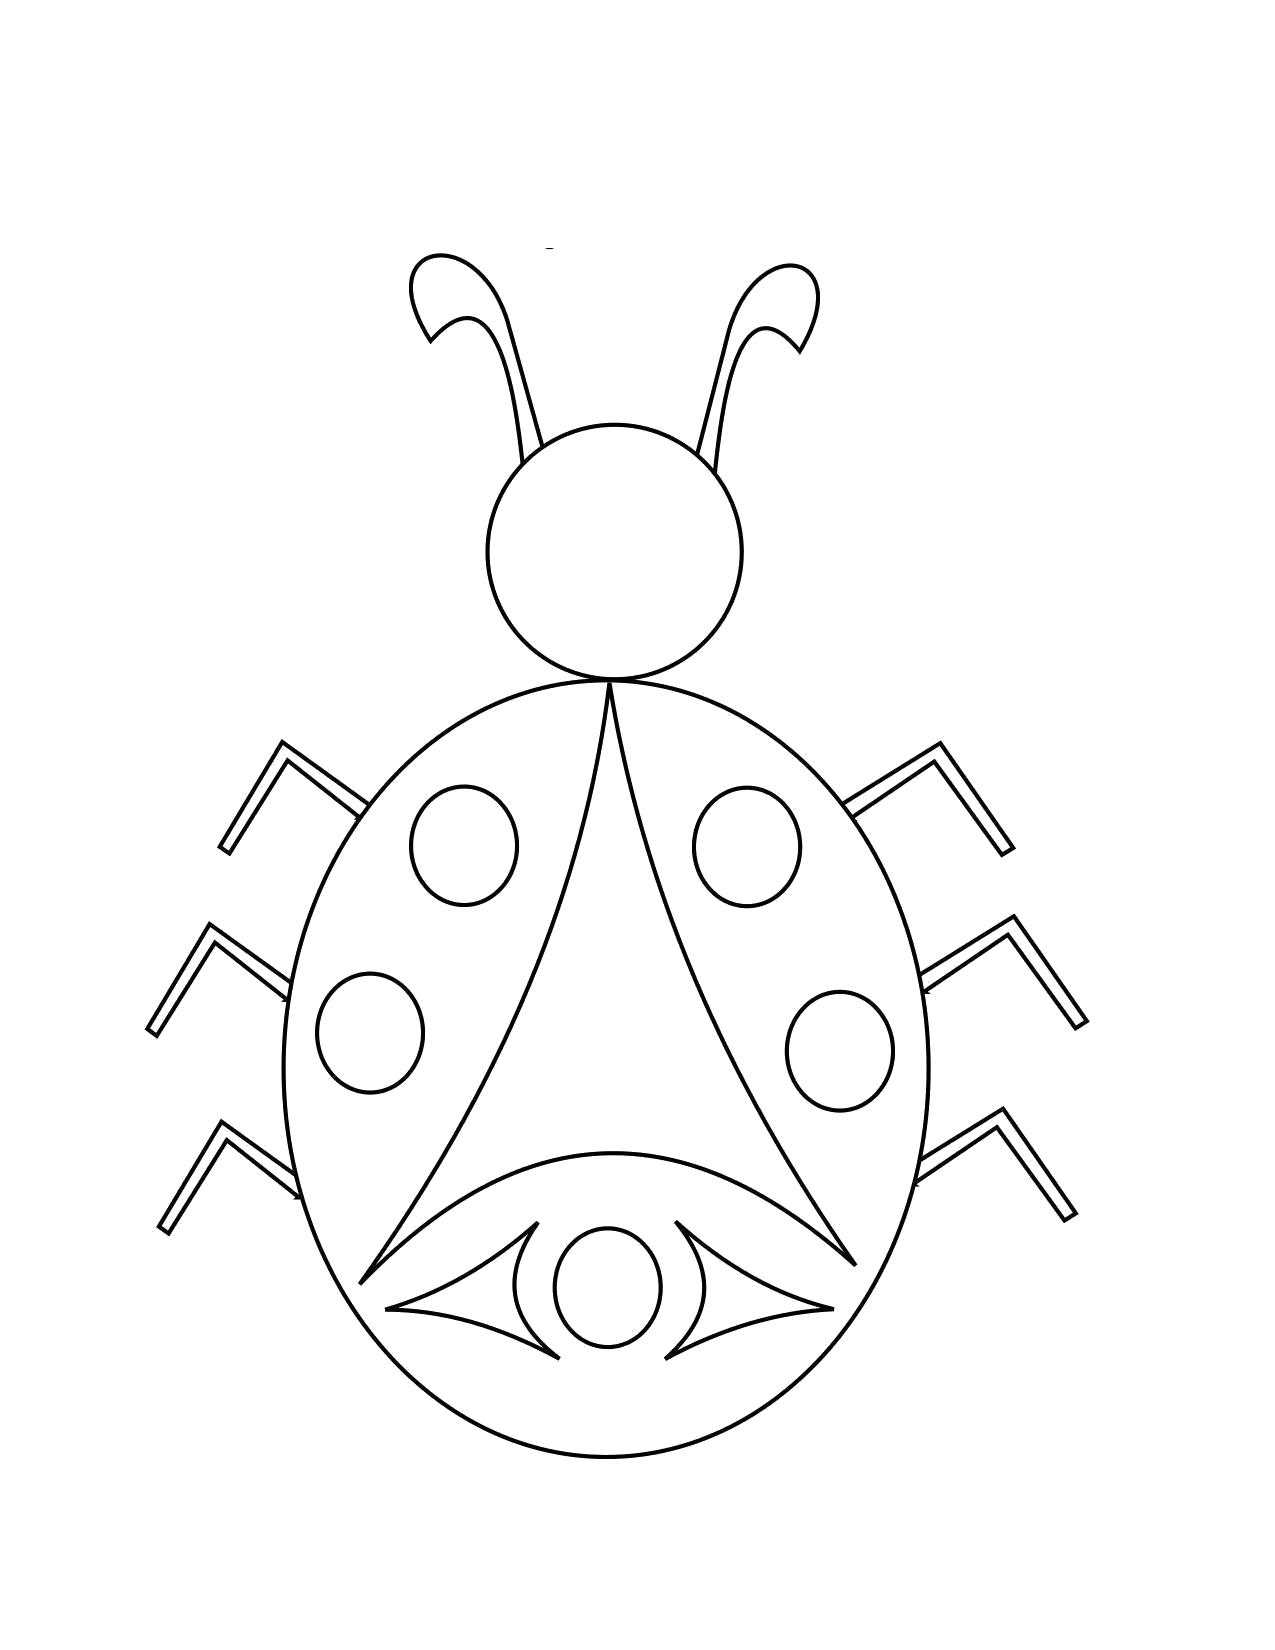 Coloring Ladybug. Category Insects. Tags:  bogaciova.